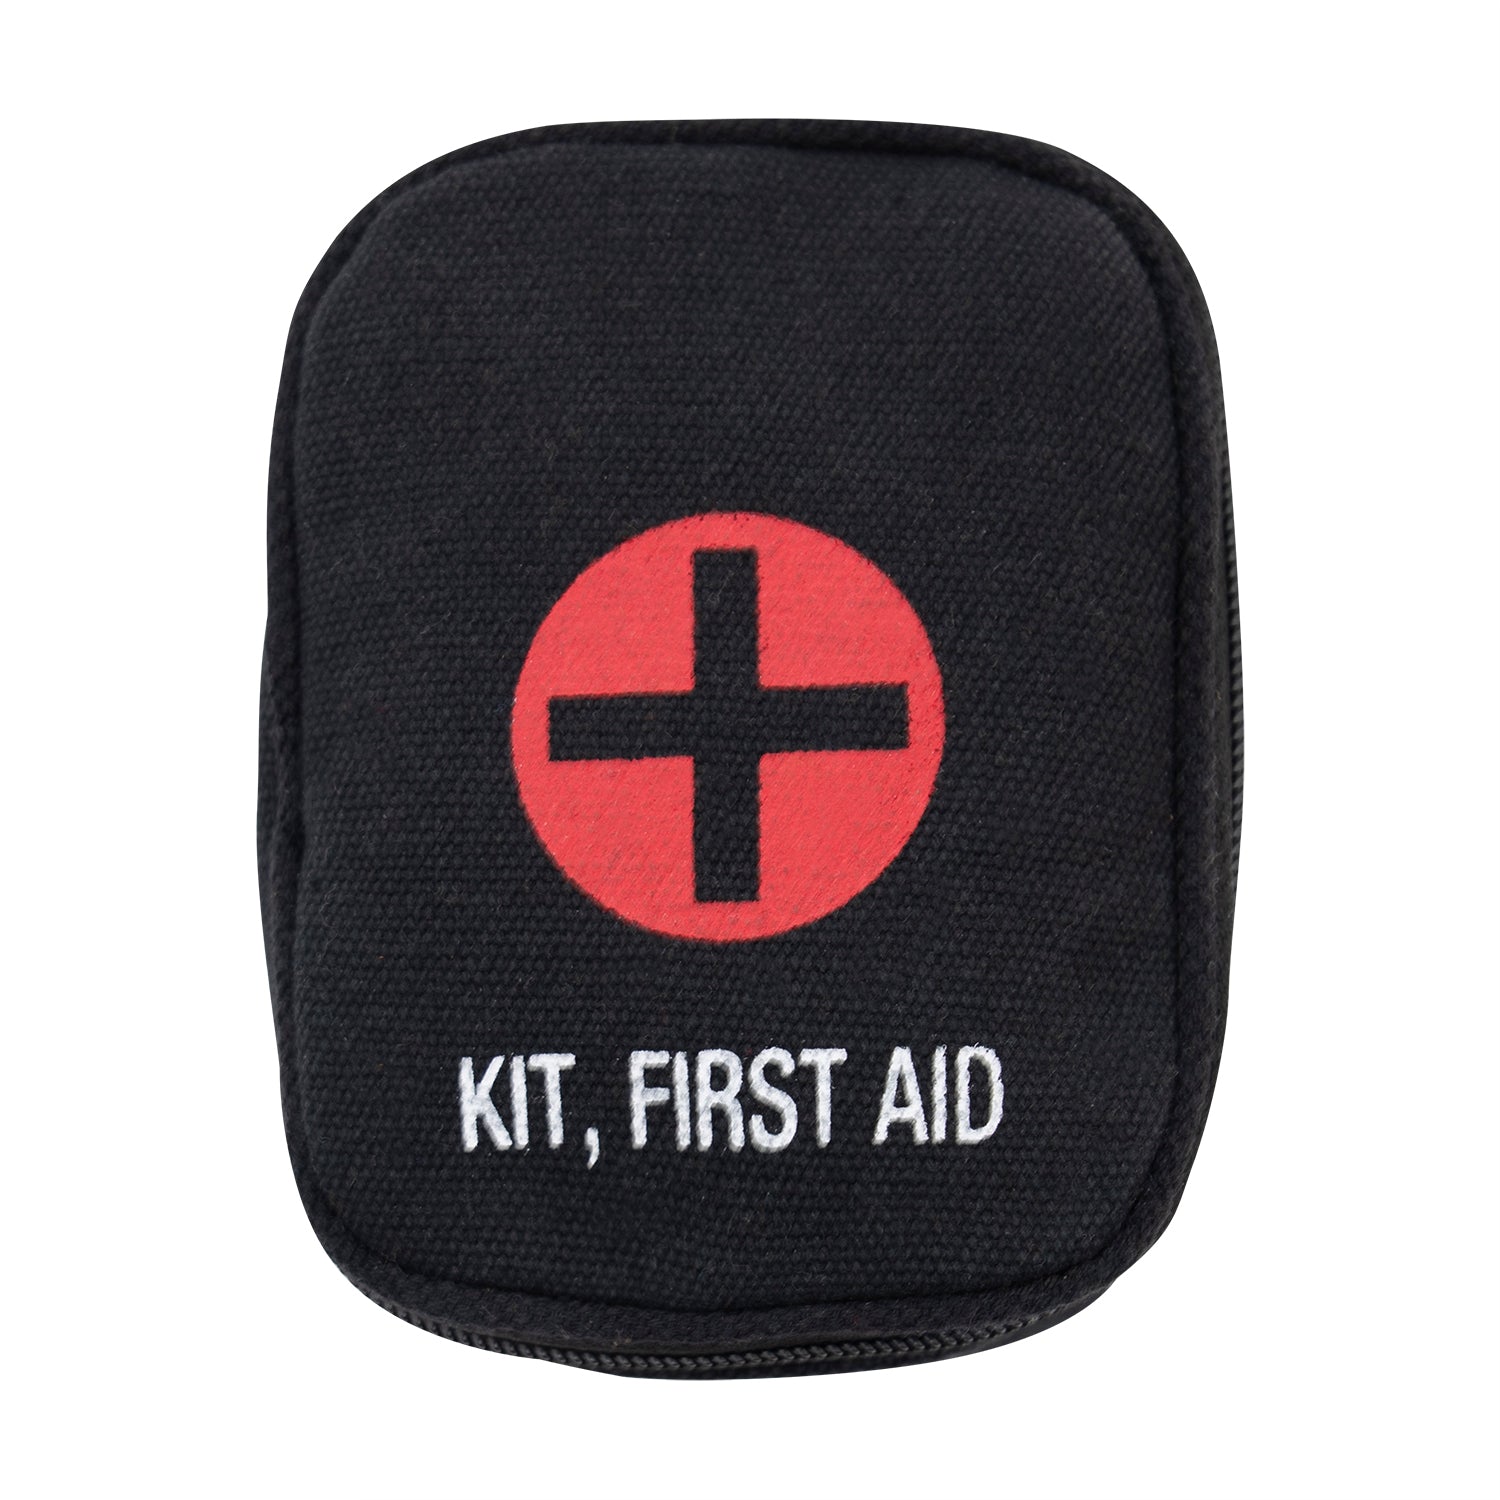 Milspec Military Zipper First Aid Kit First Aid Supplies & Snake Bite Kits MilTac Tactical Military Outdoor Gear Australia